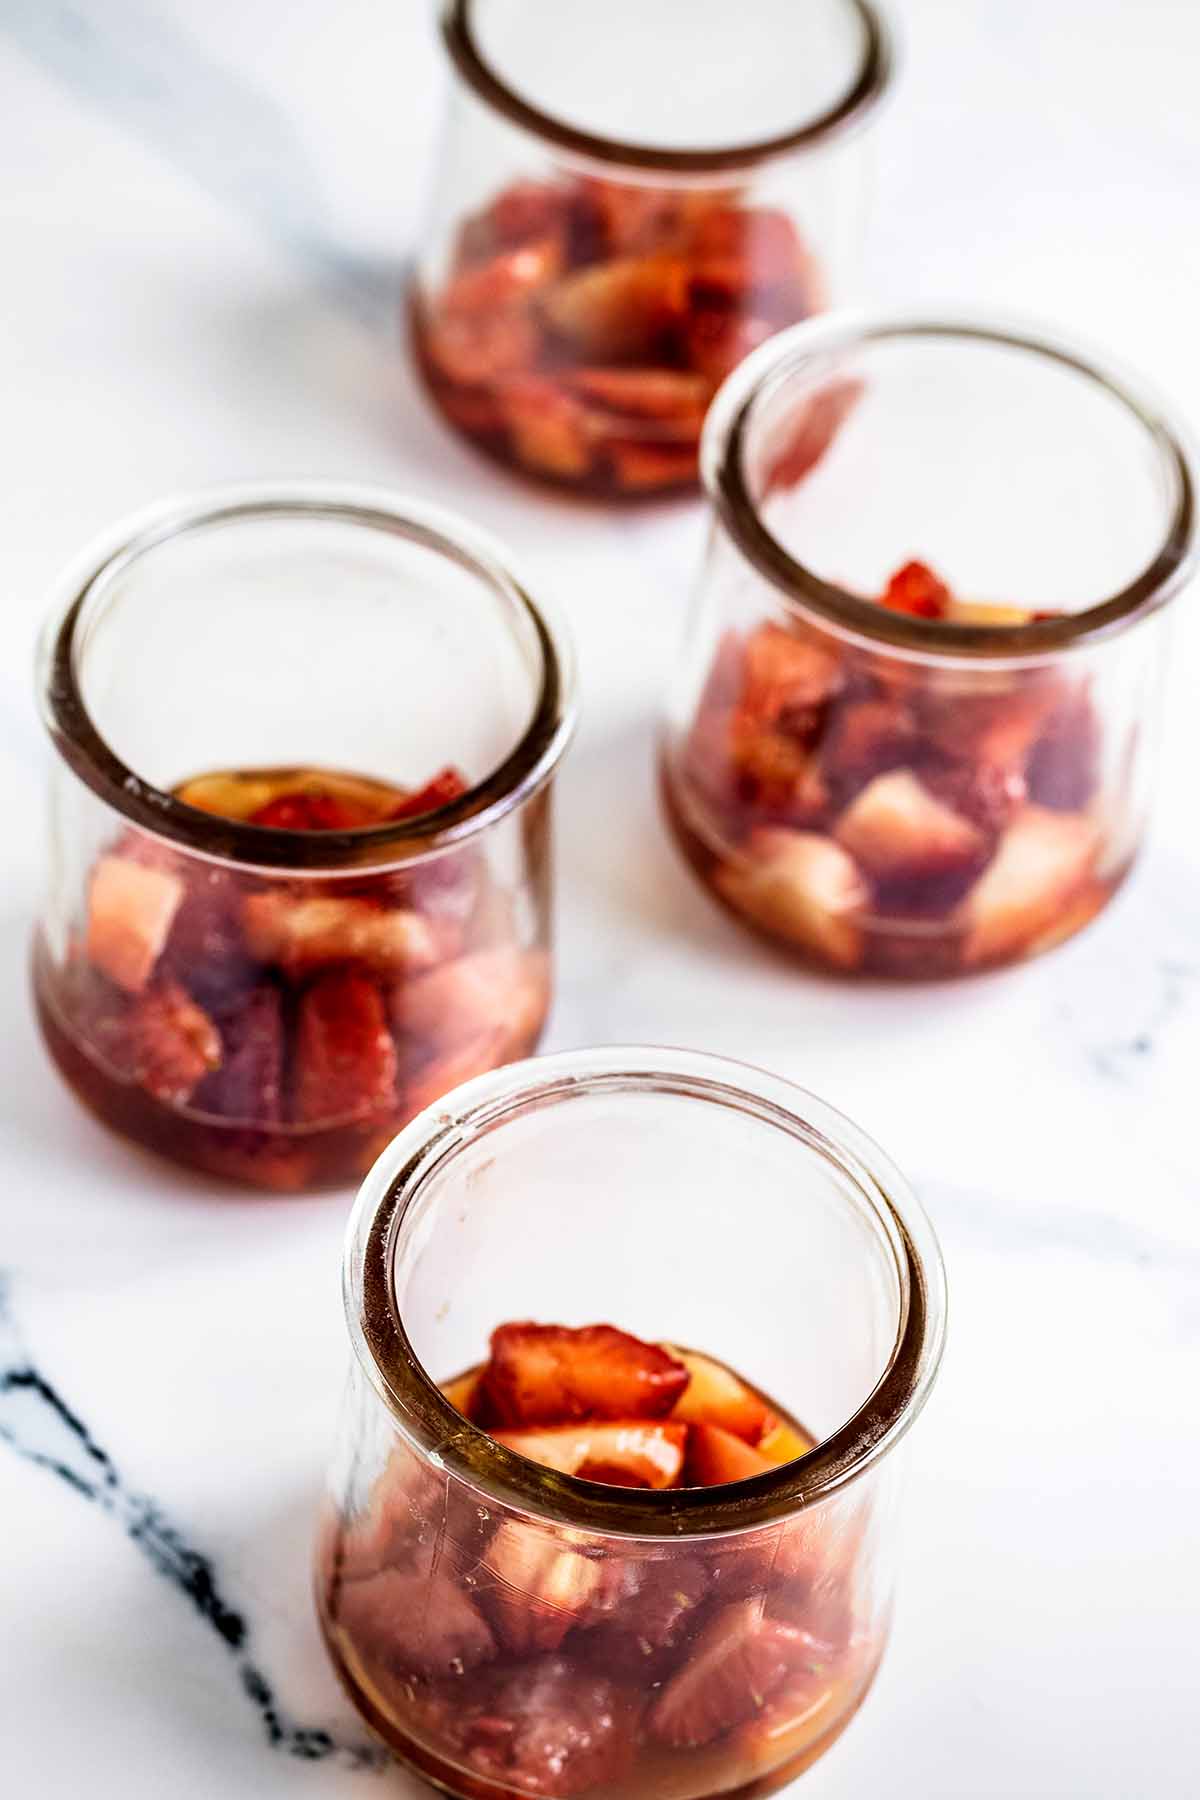 Berry mixture in glass jars